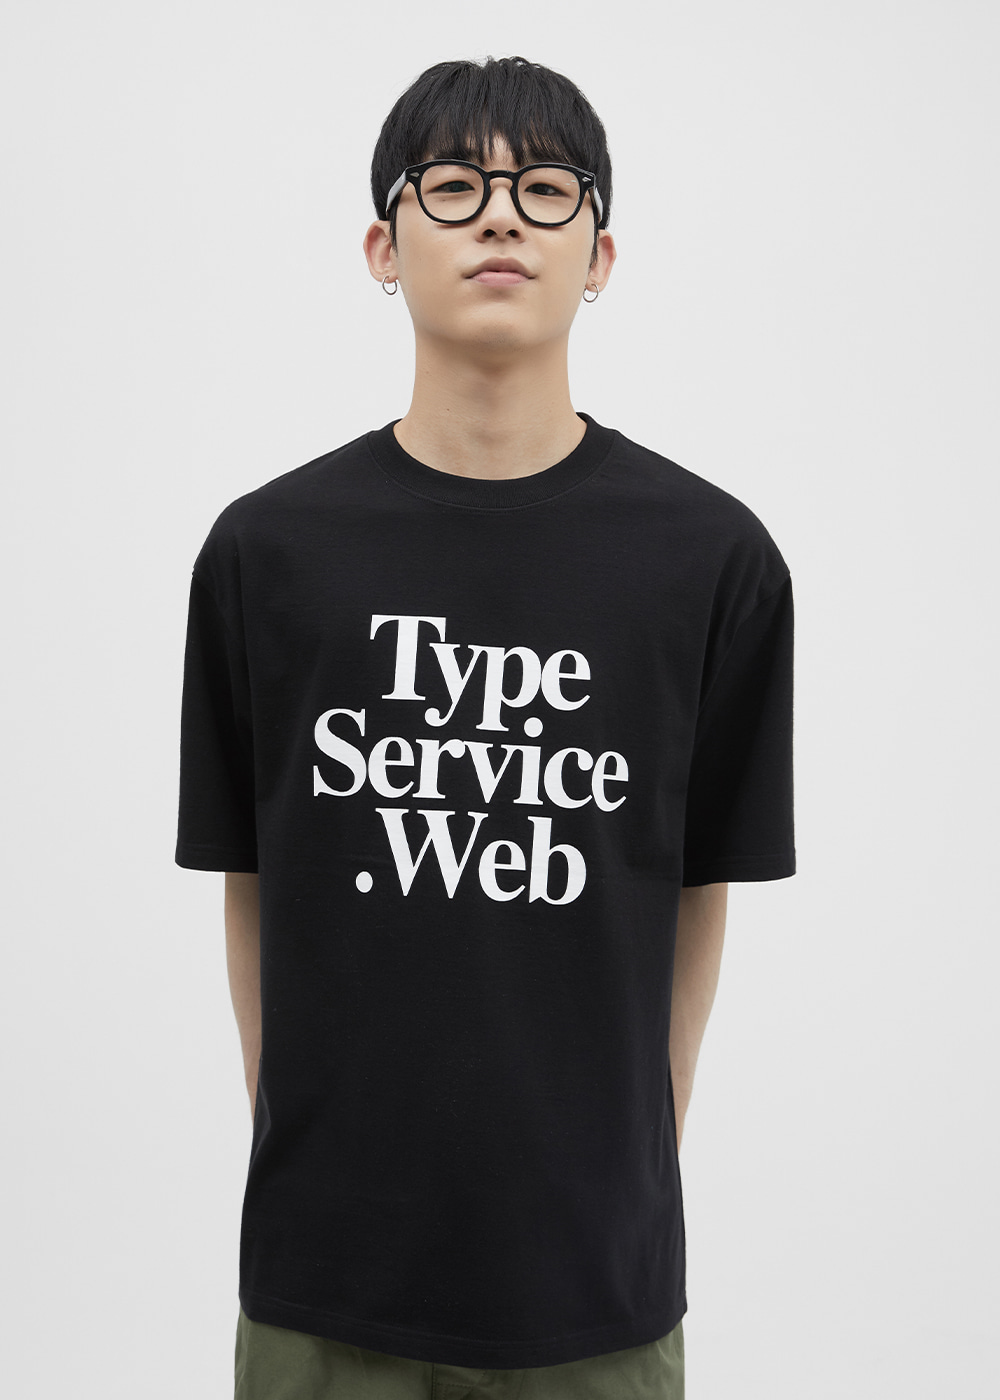 Typeservice Web T-shirt [Black]